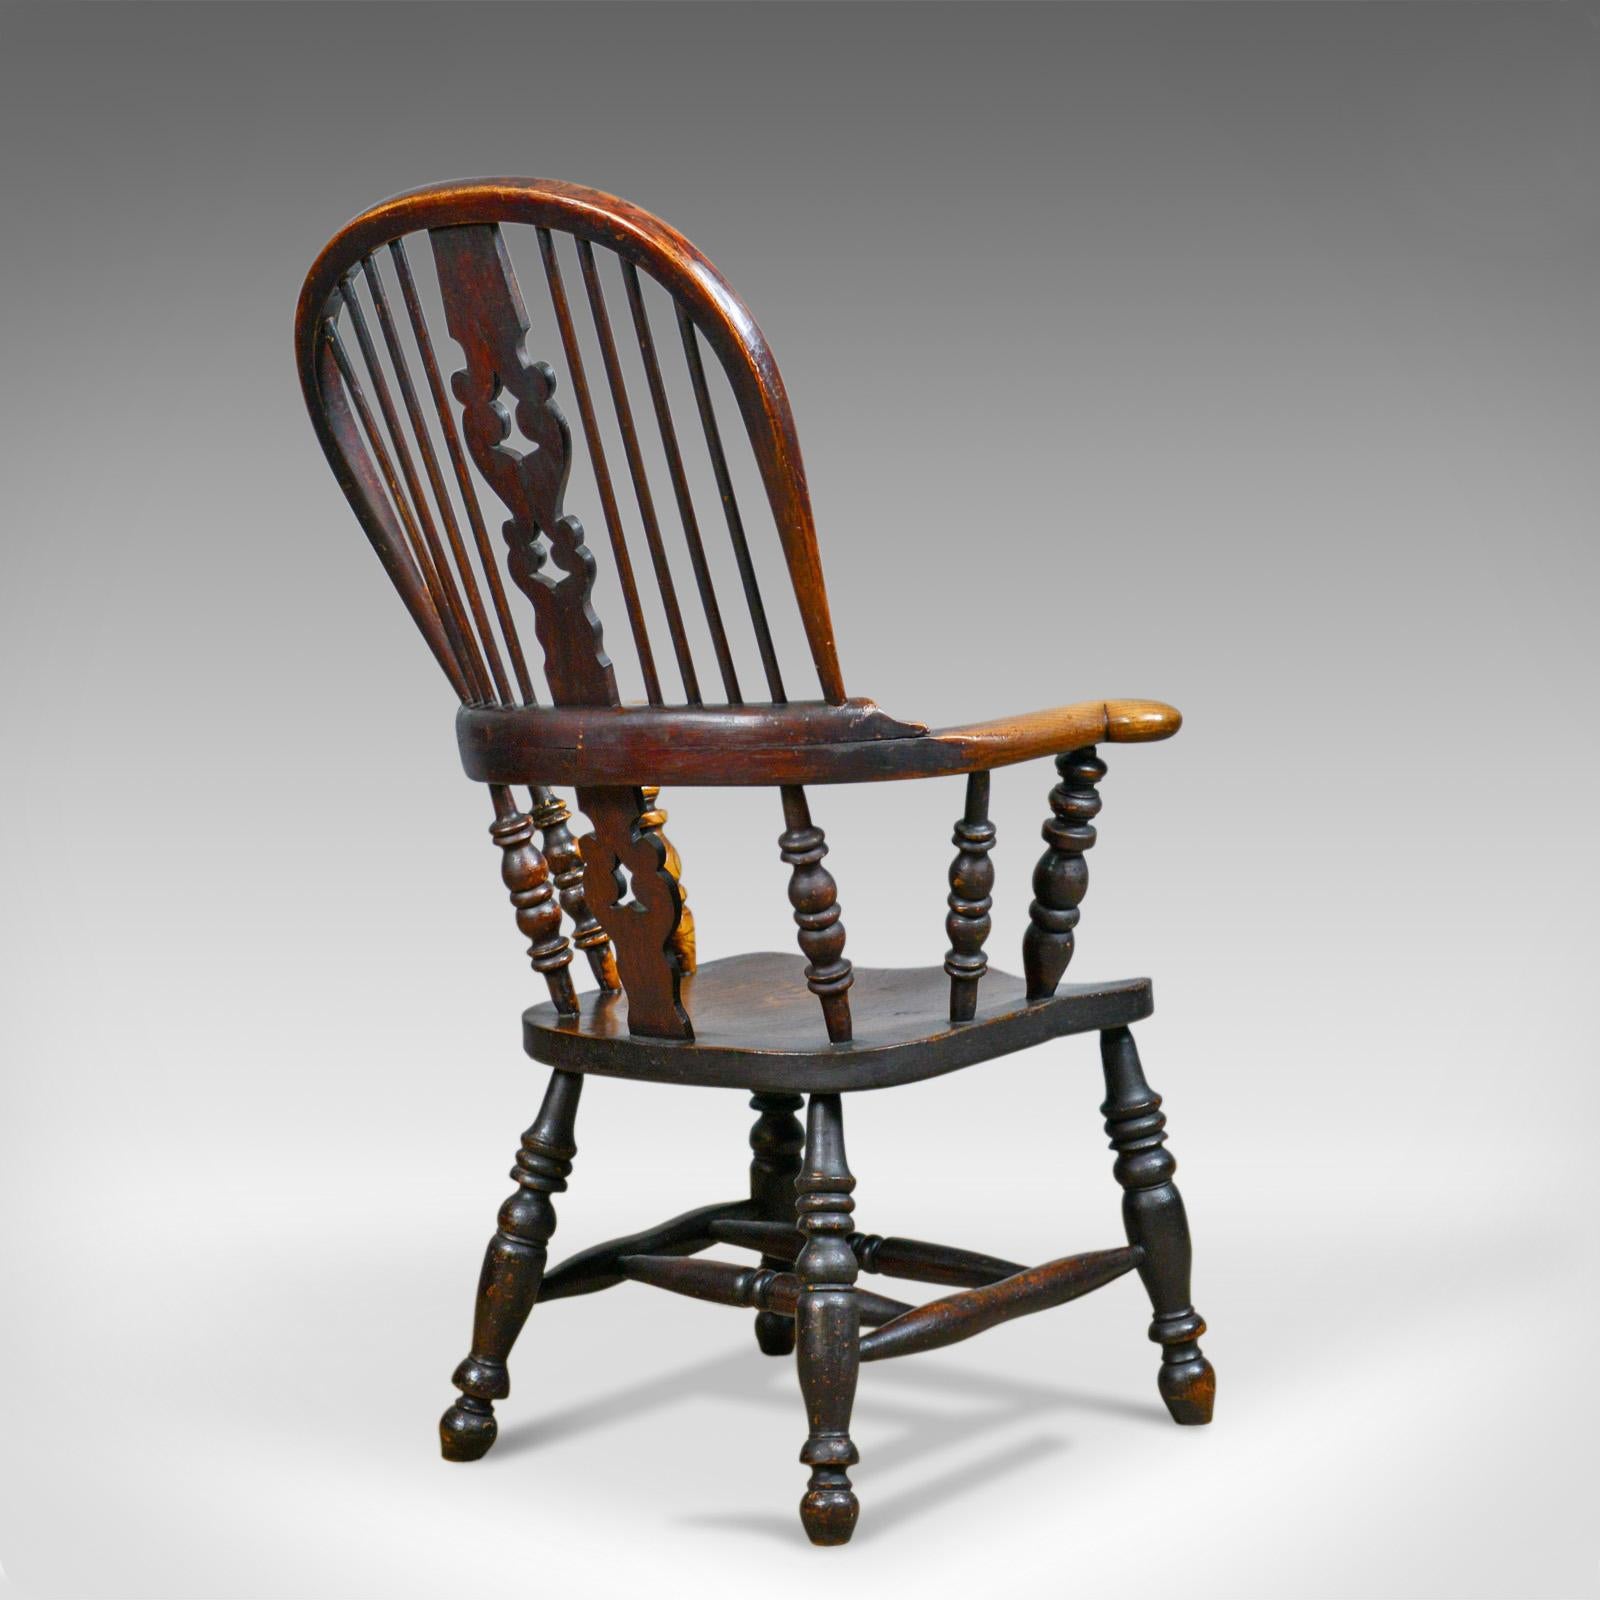 19th Century Antique Windsor Broad Arm Elbow Chair, English, Victorian, Elm, Ash, circa 1850